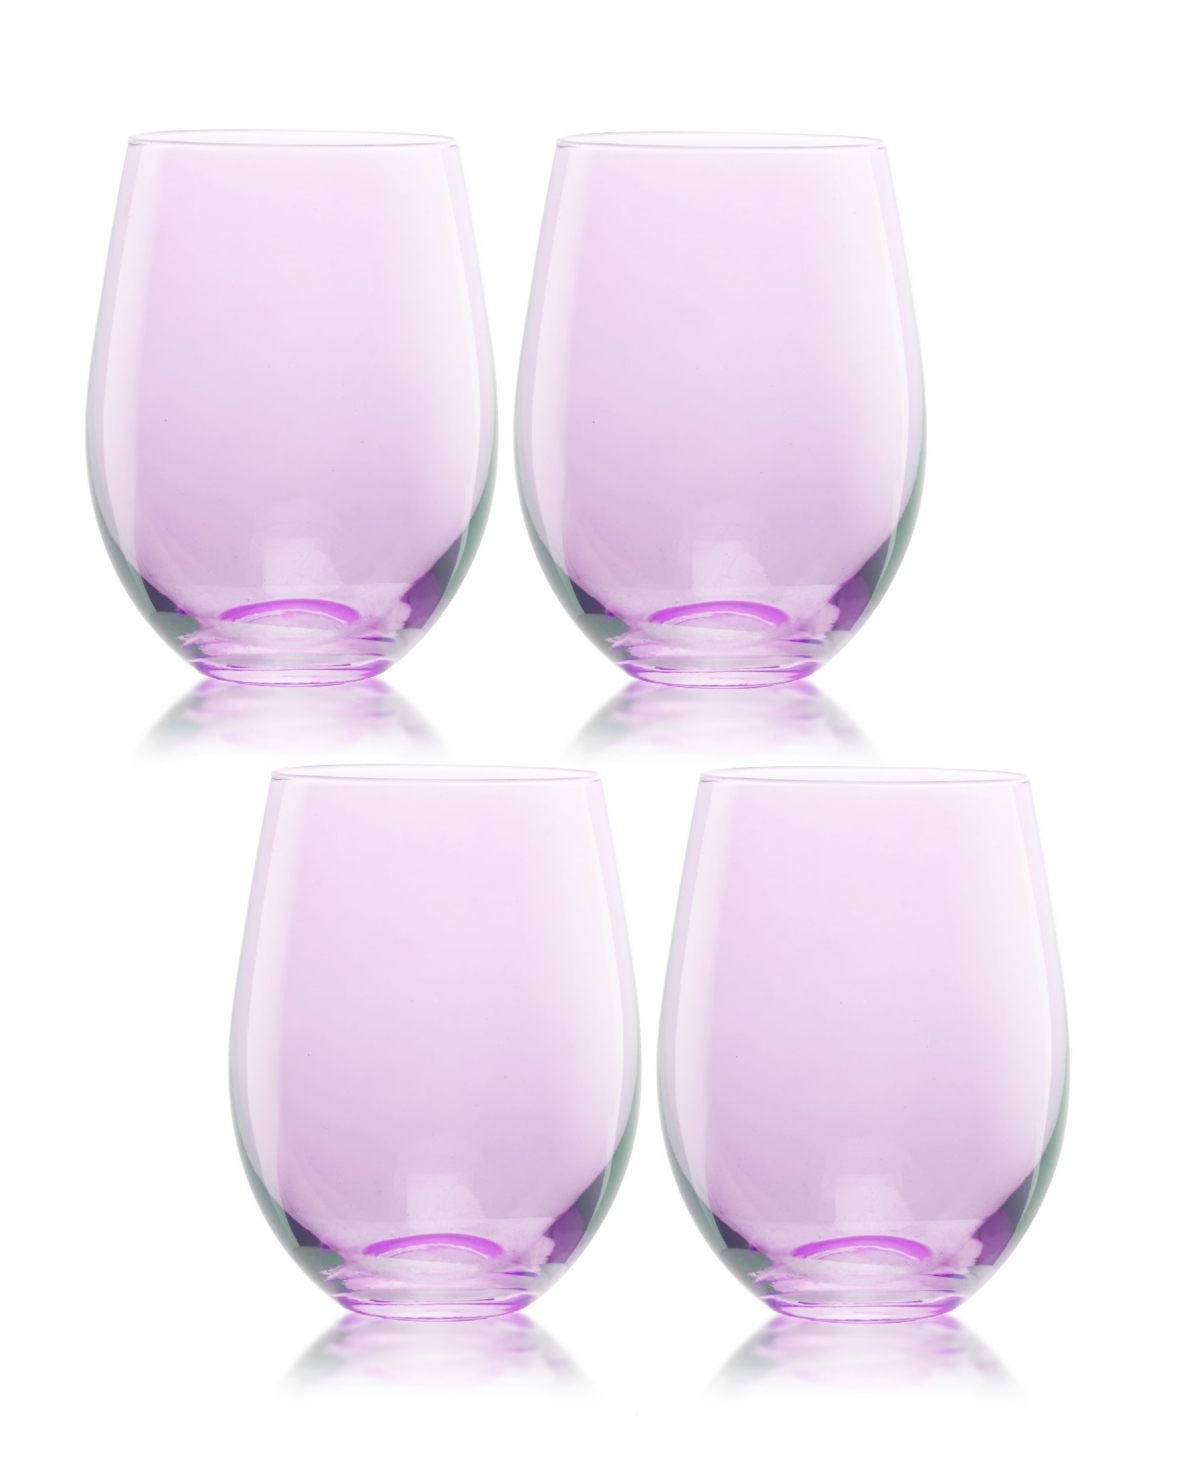 QUALIA GLASS CARNIVAL STEMLESS 19 OZ WINE GLASSES, SET OF 4